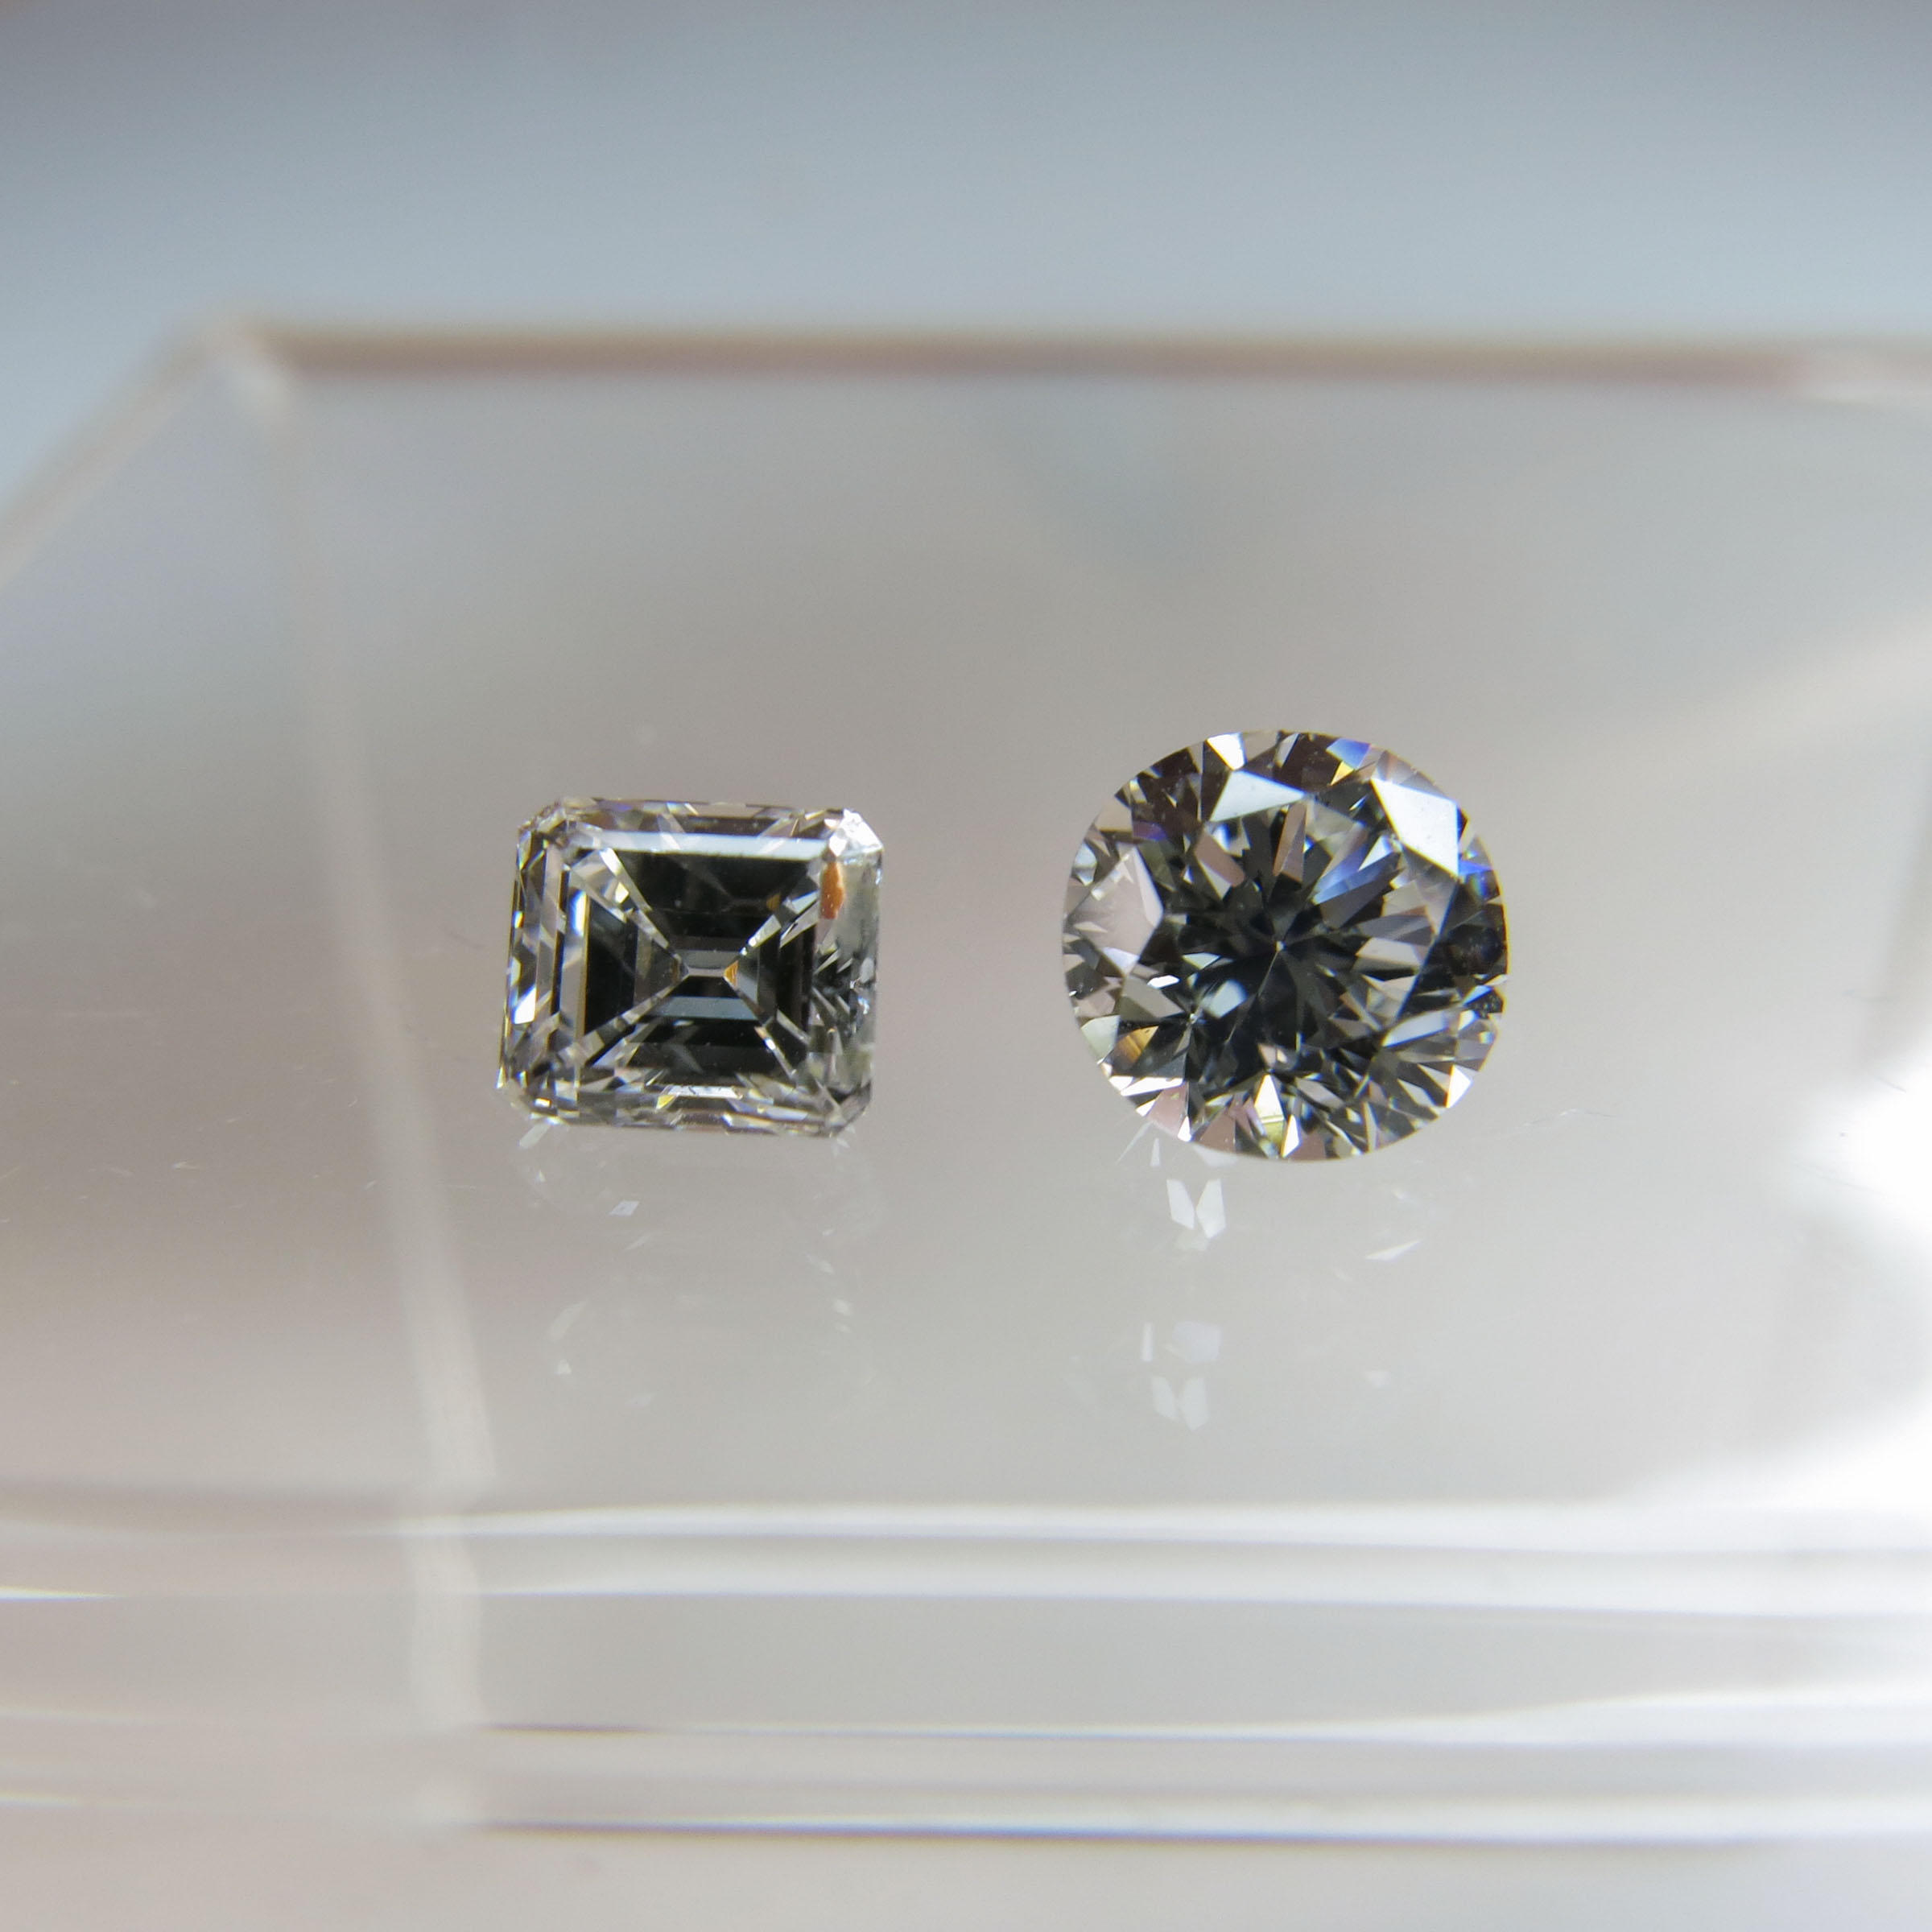 2 Unmounted Diamonds